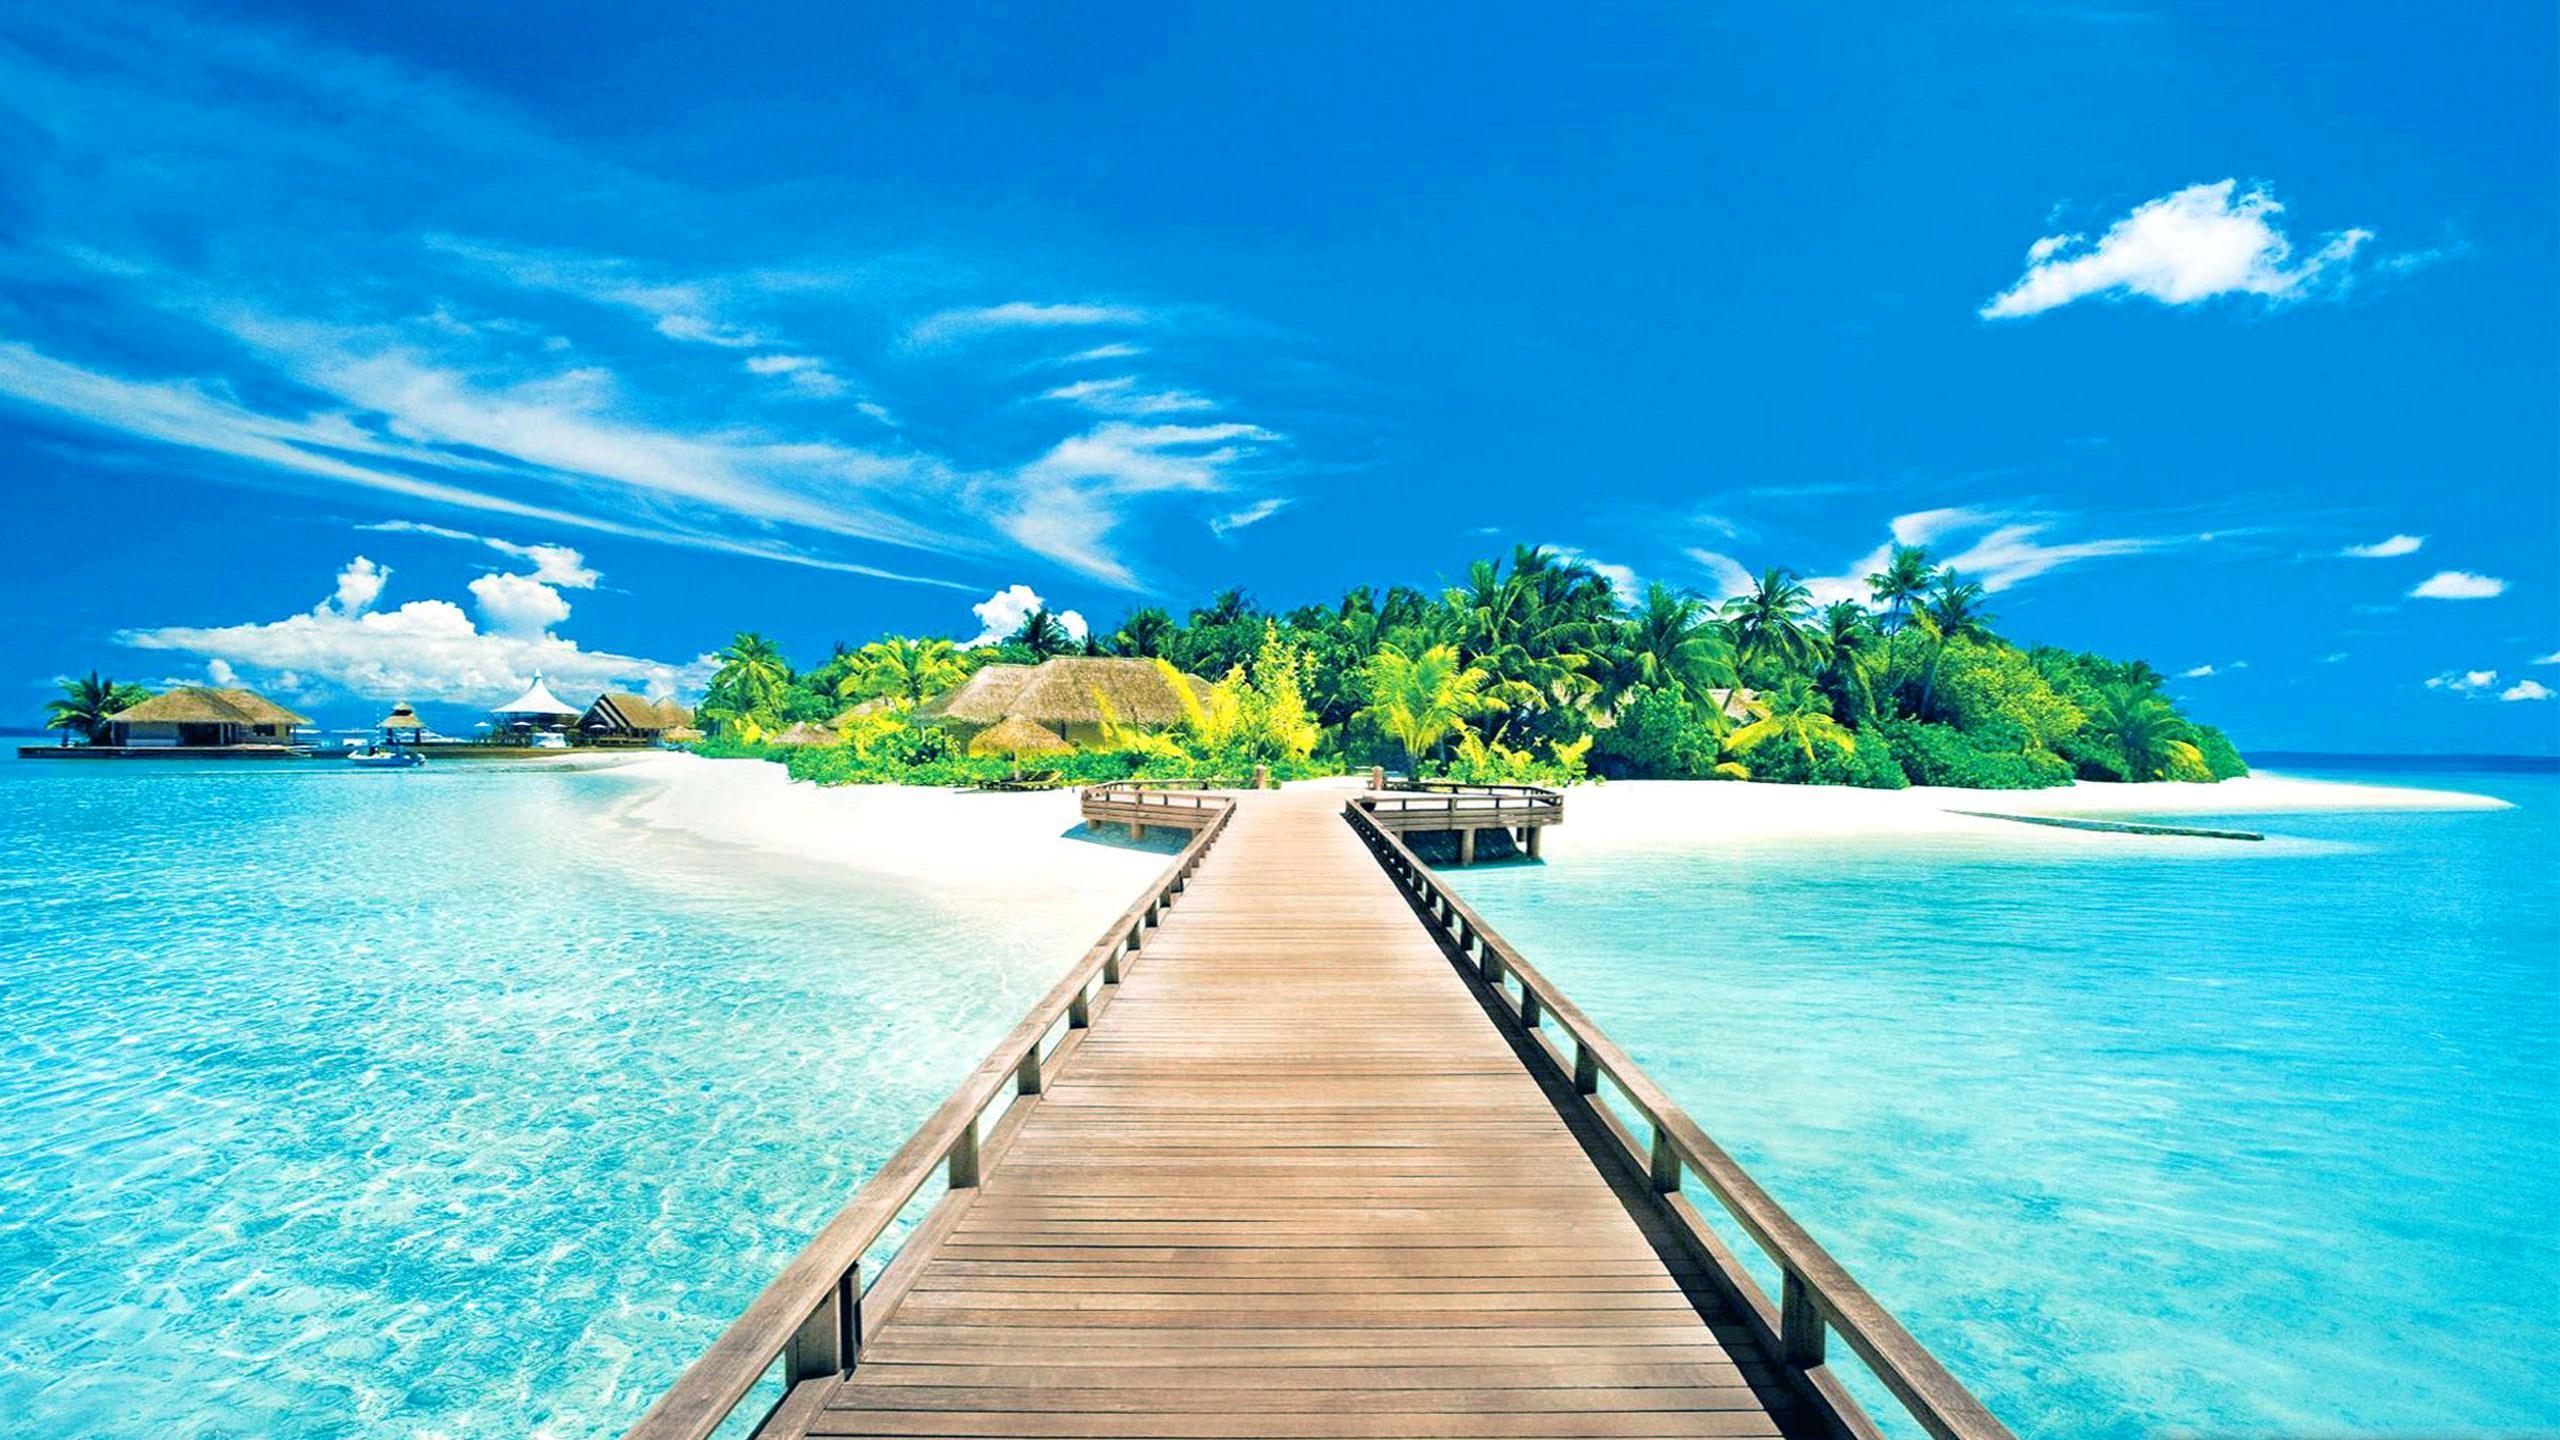 Tropical Island Paradise Backgrounds